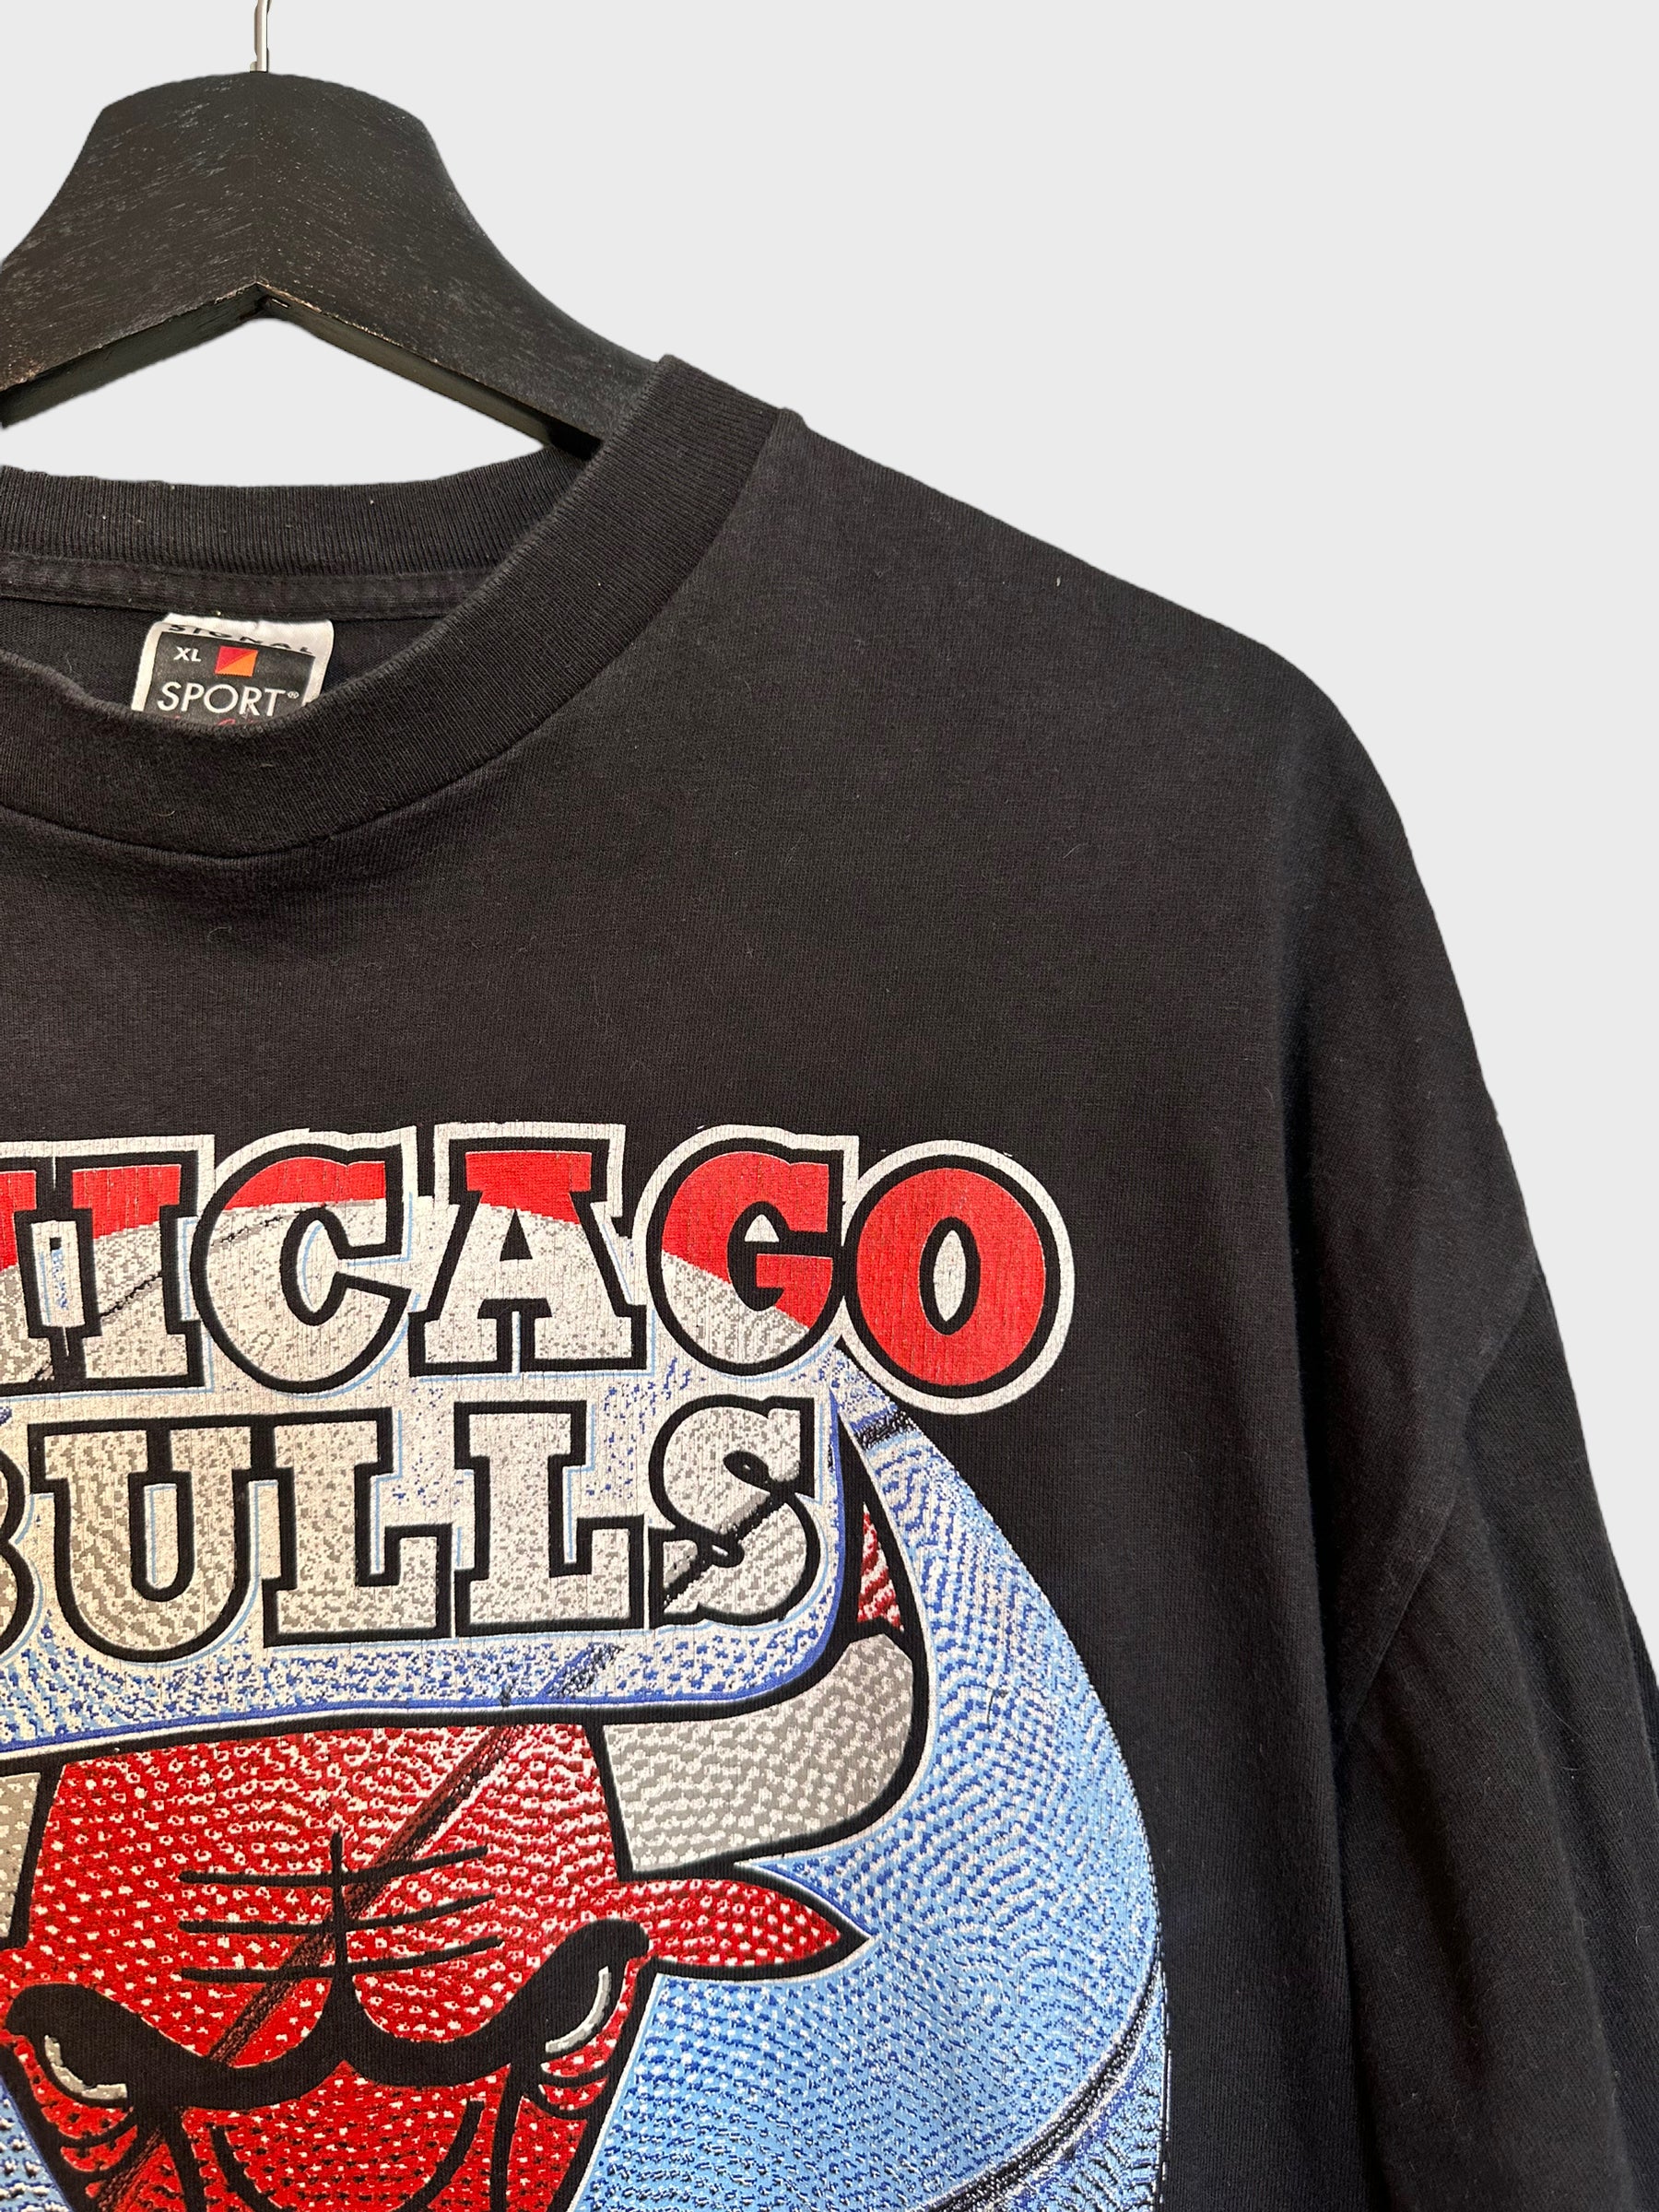 Chicago Bulls 1996 T-shirt